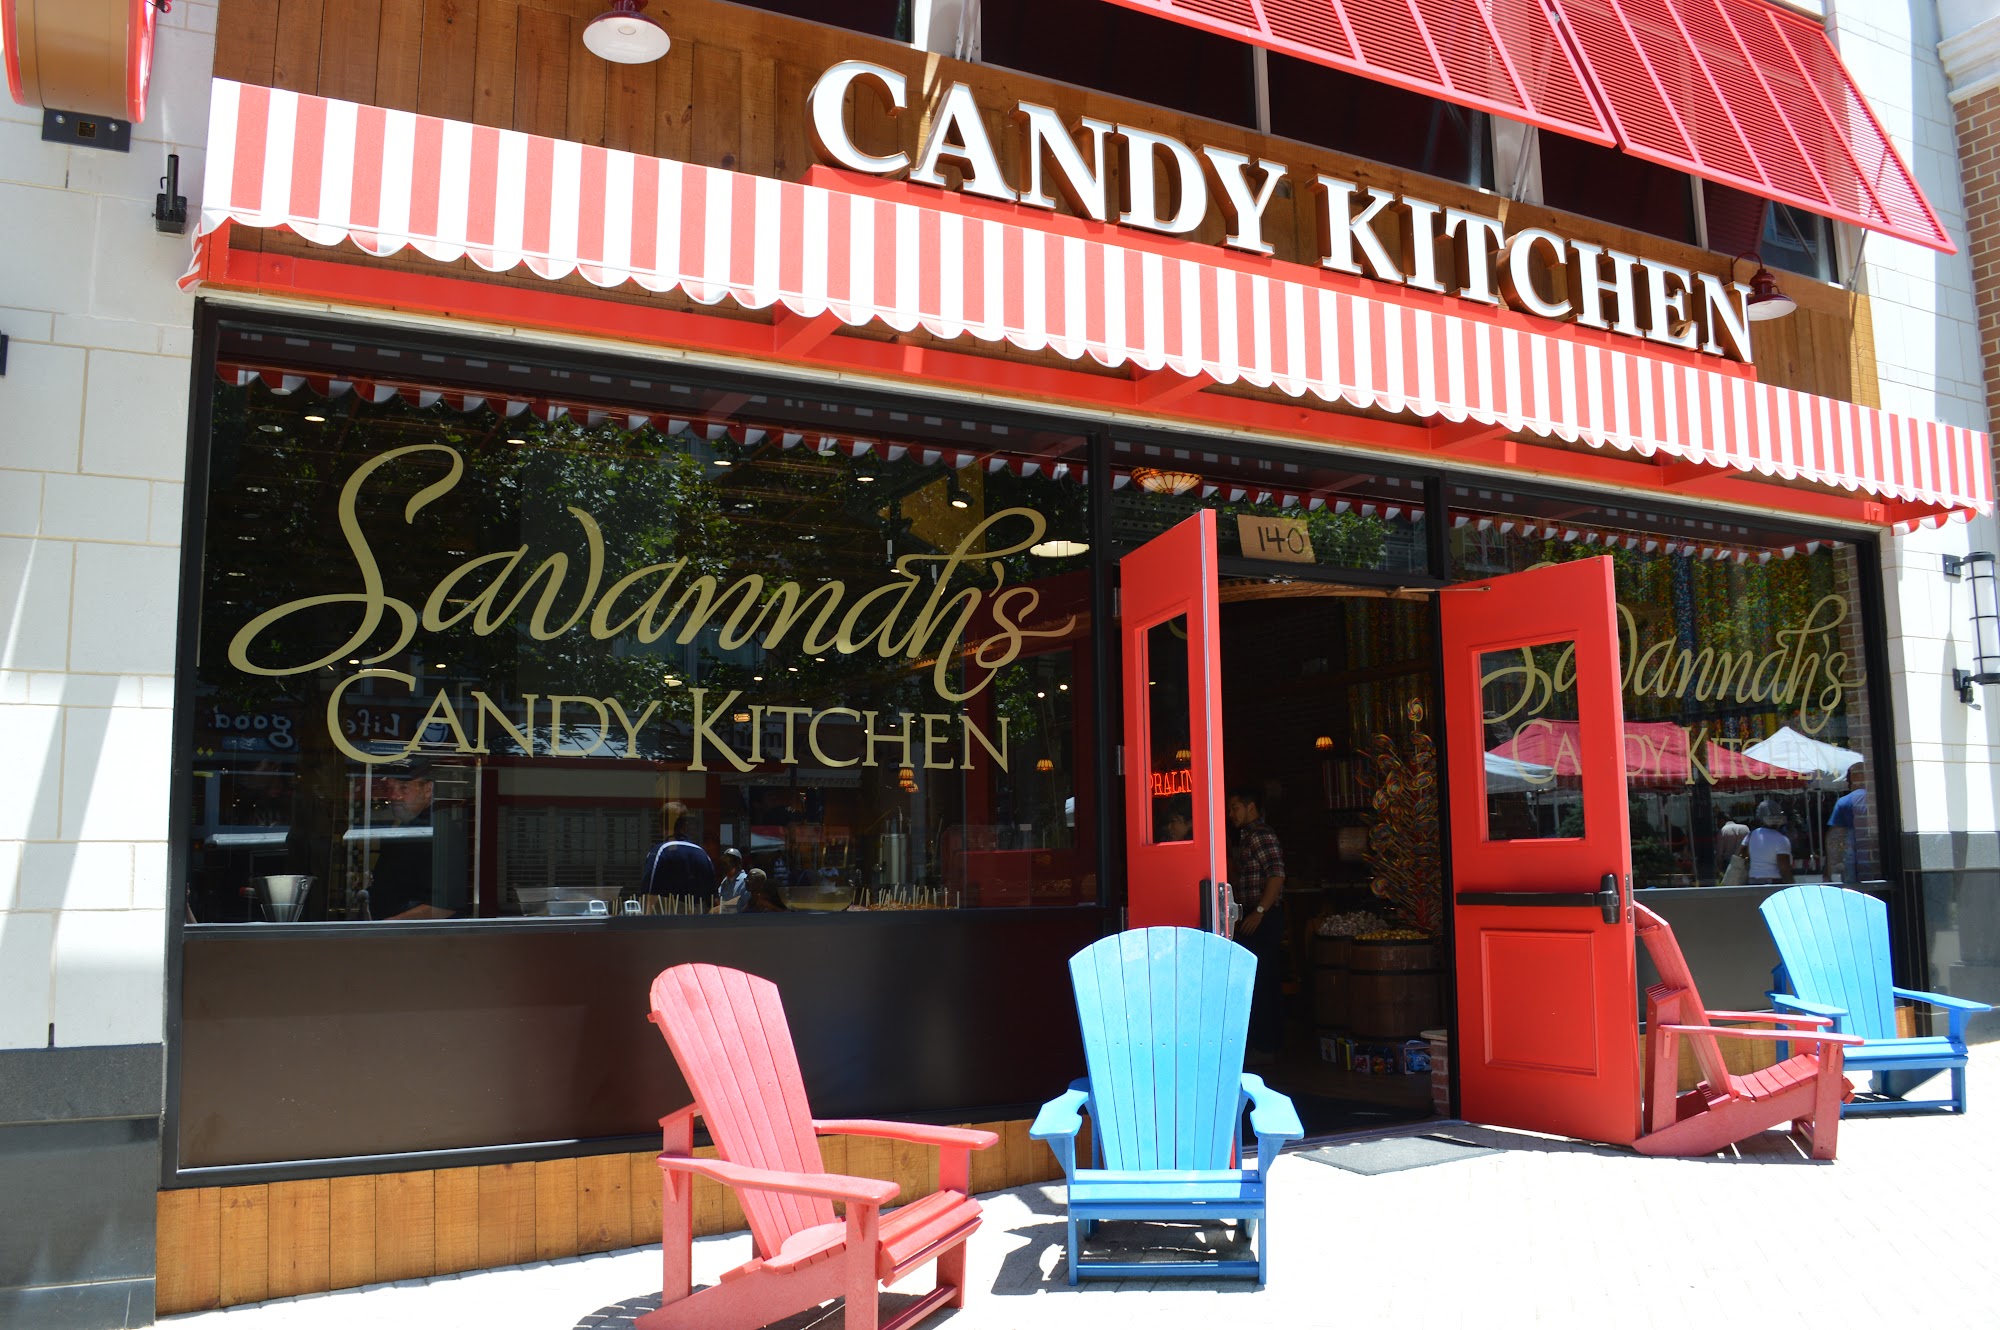 Savannah's Candy Kitchen